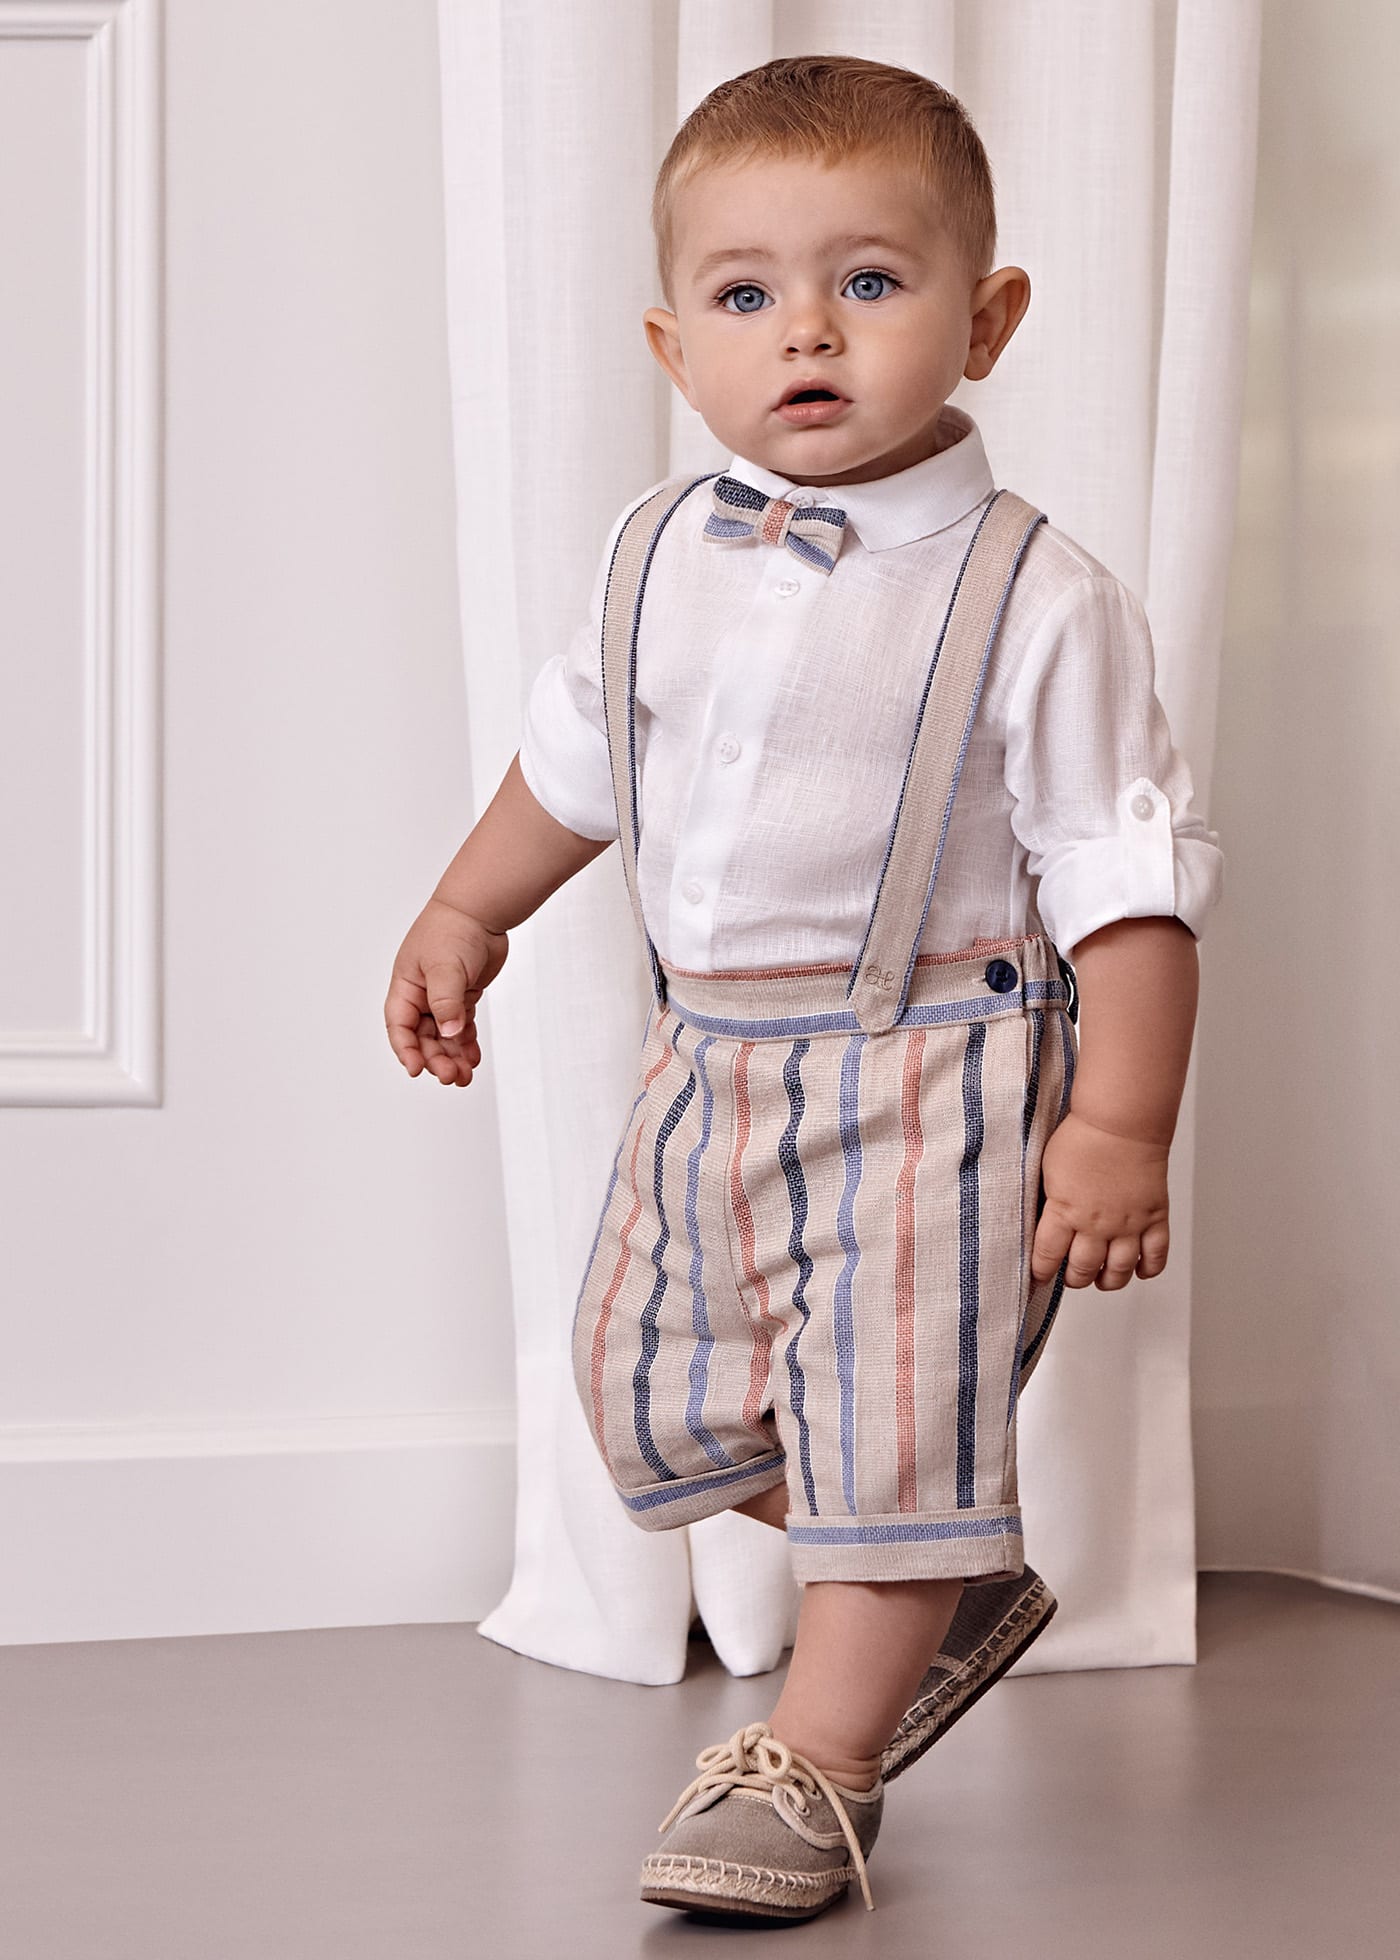 Baby Shirt and Striped Shorts Set